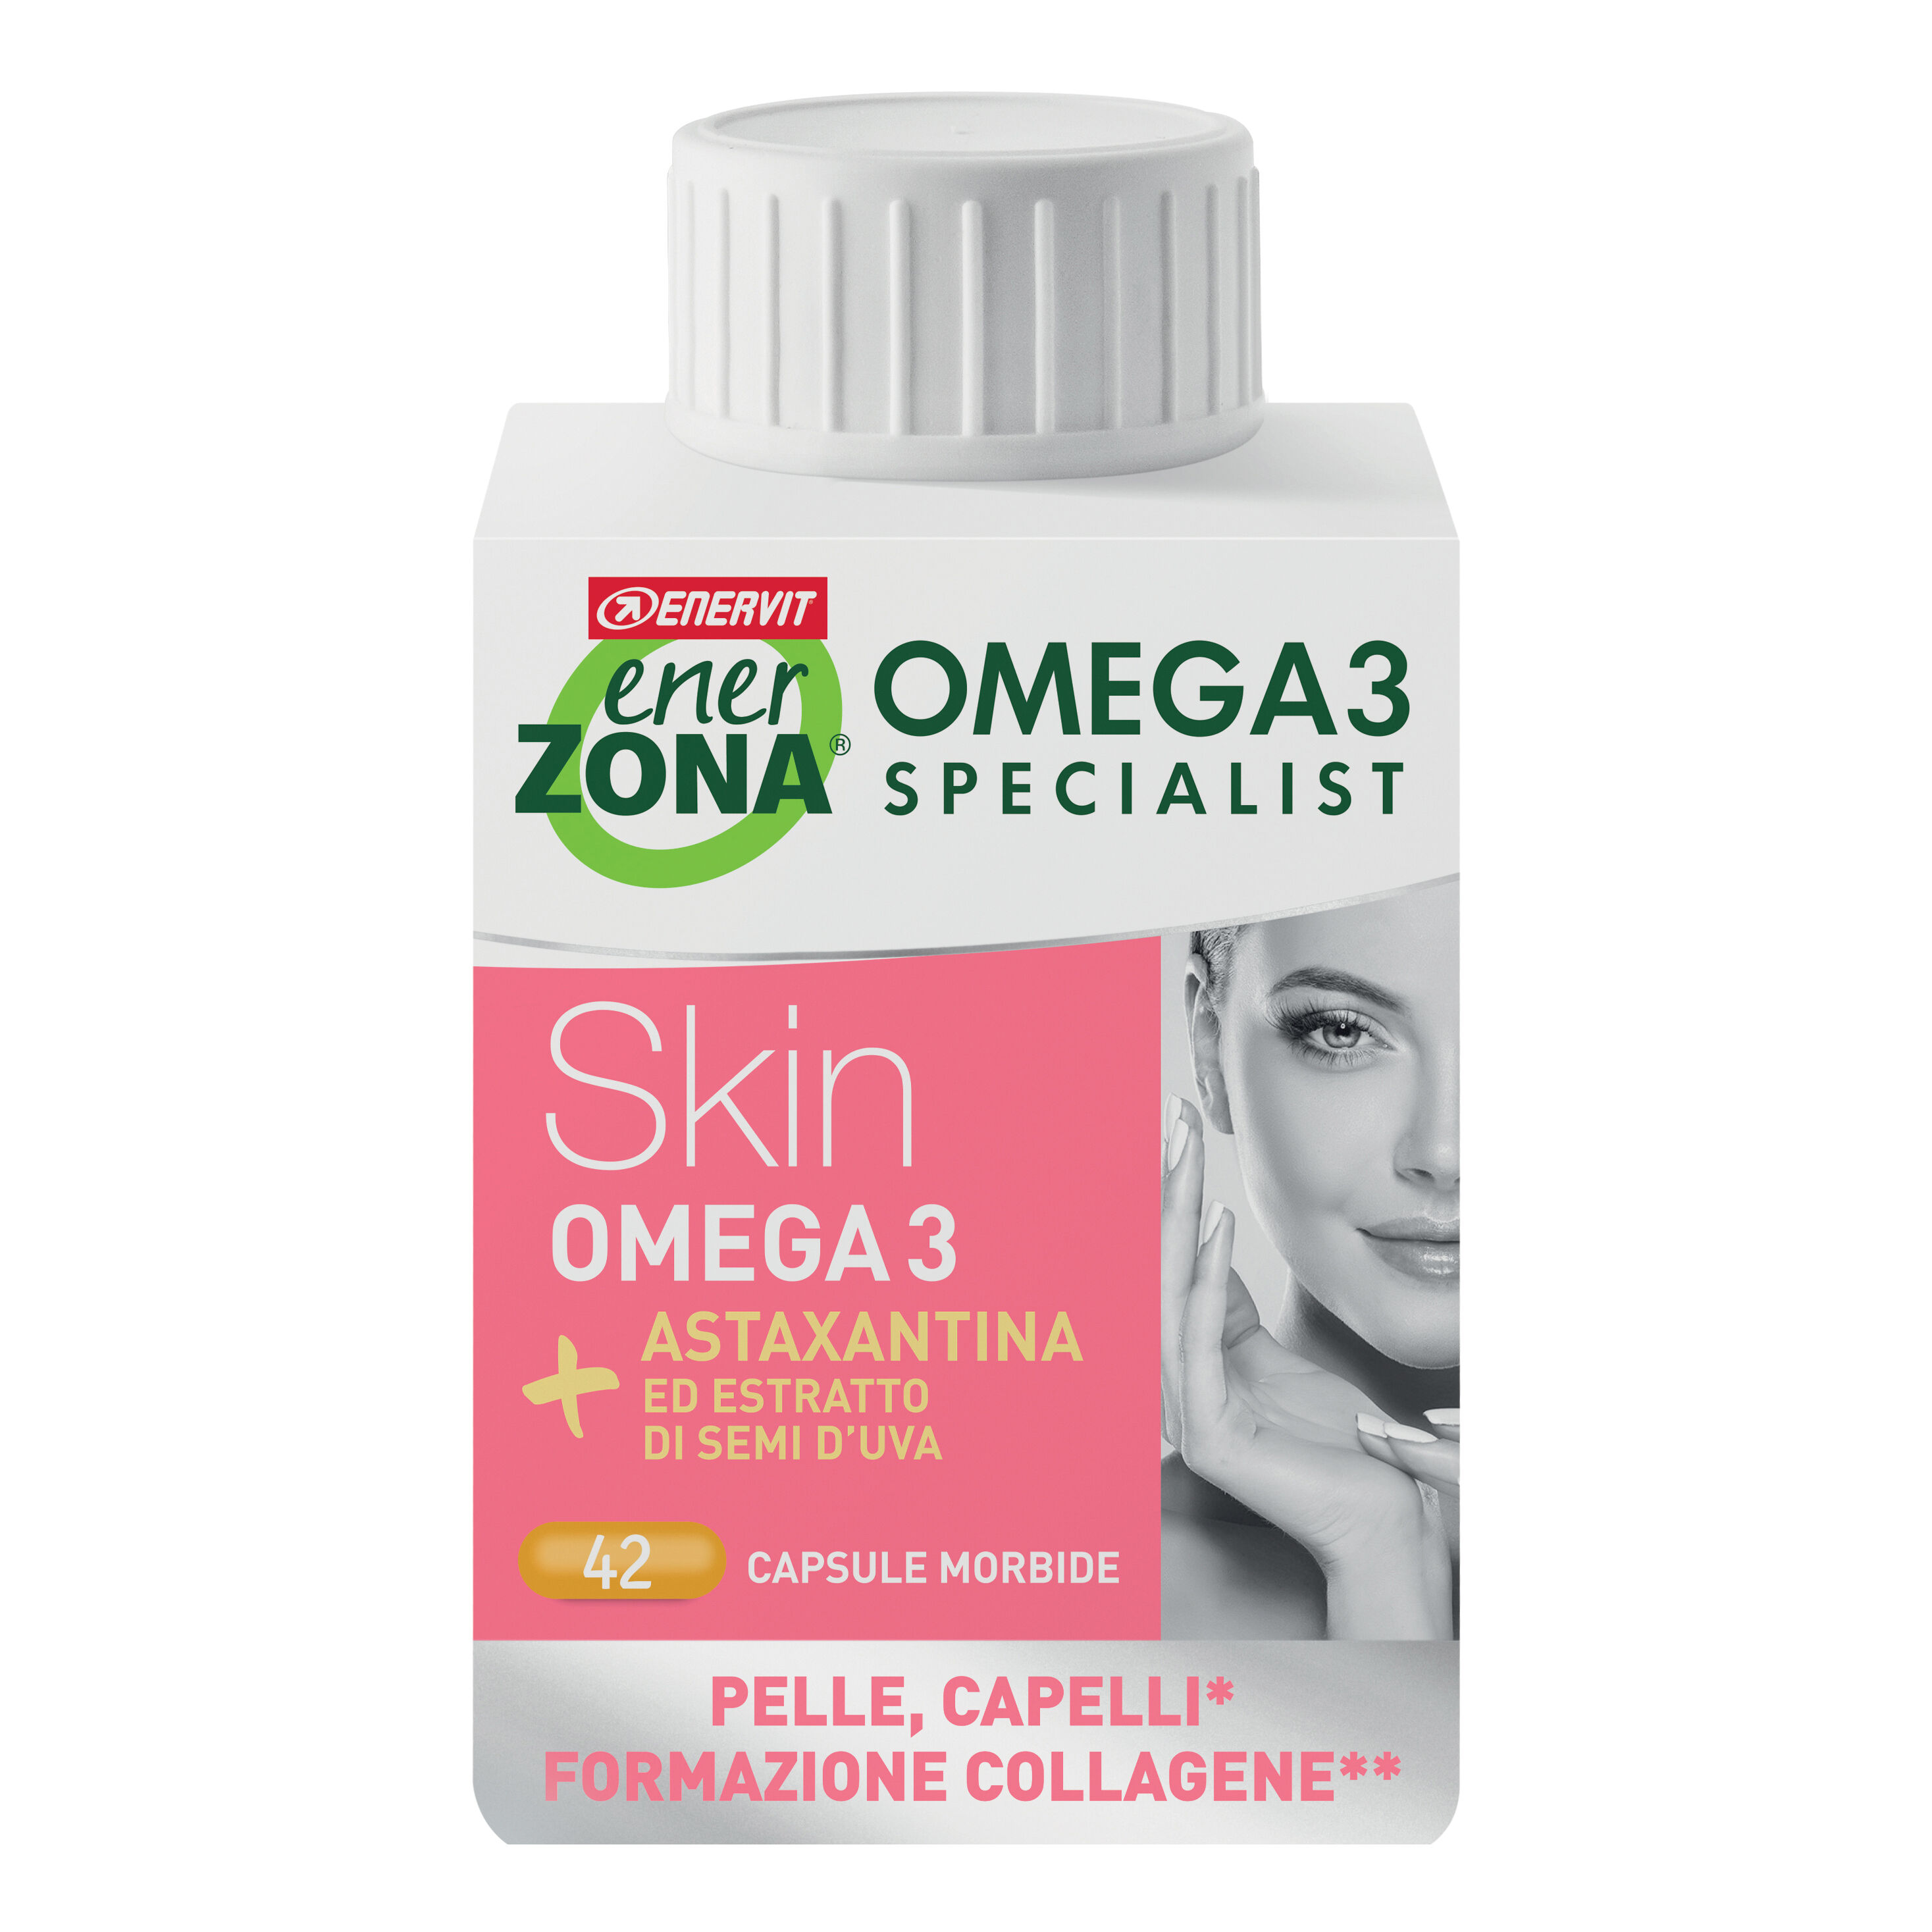 Enervit Enerzona Omega 3 Rx Skin 42 Capsule